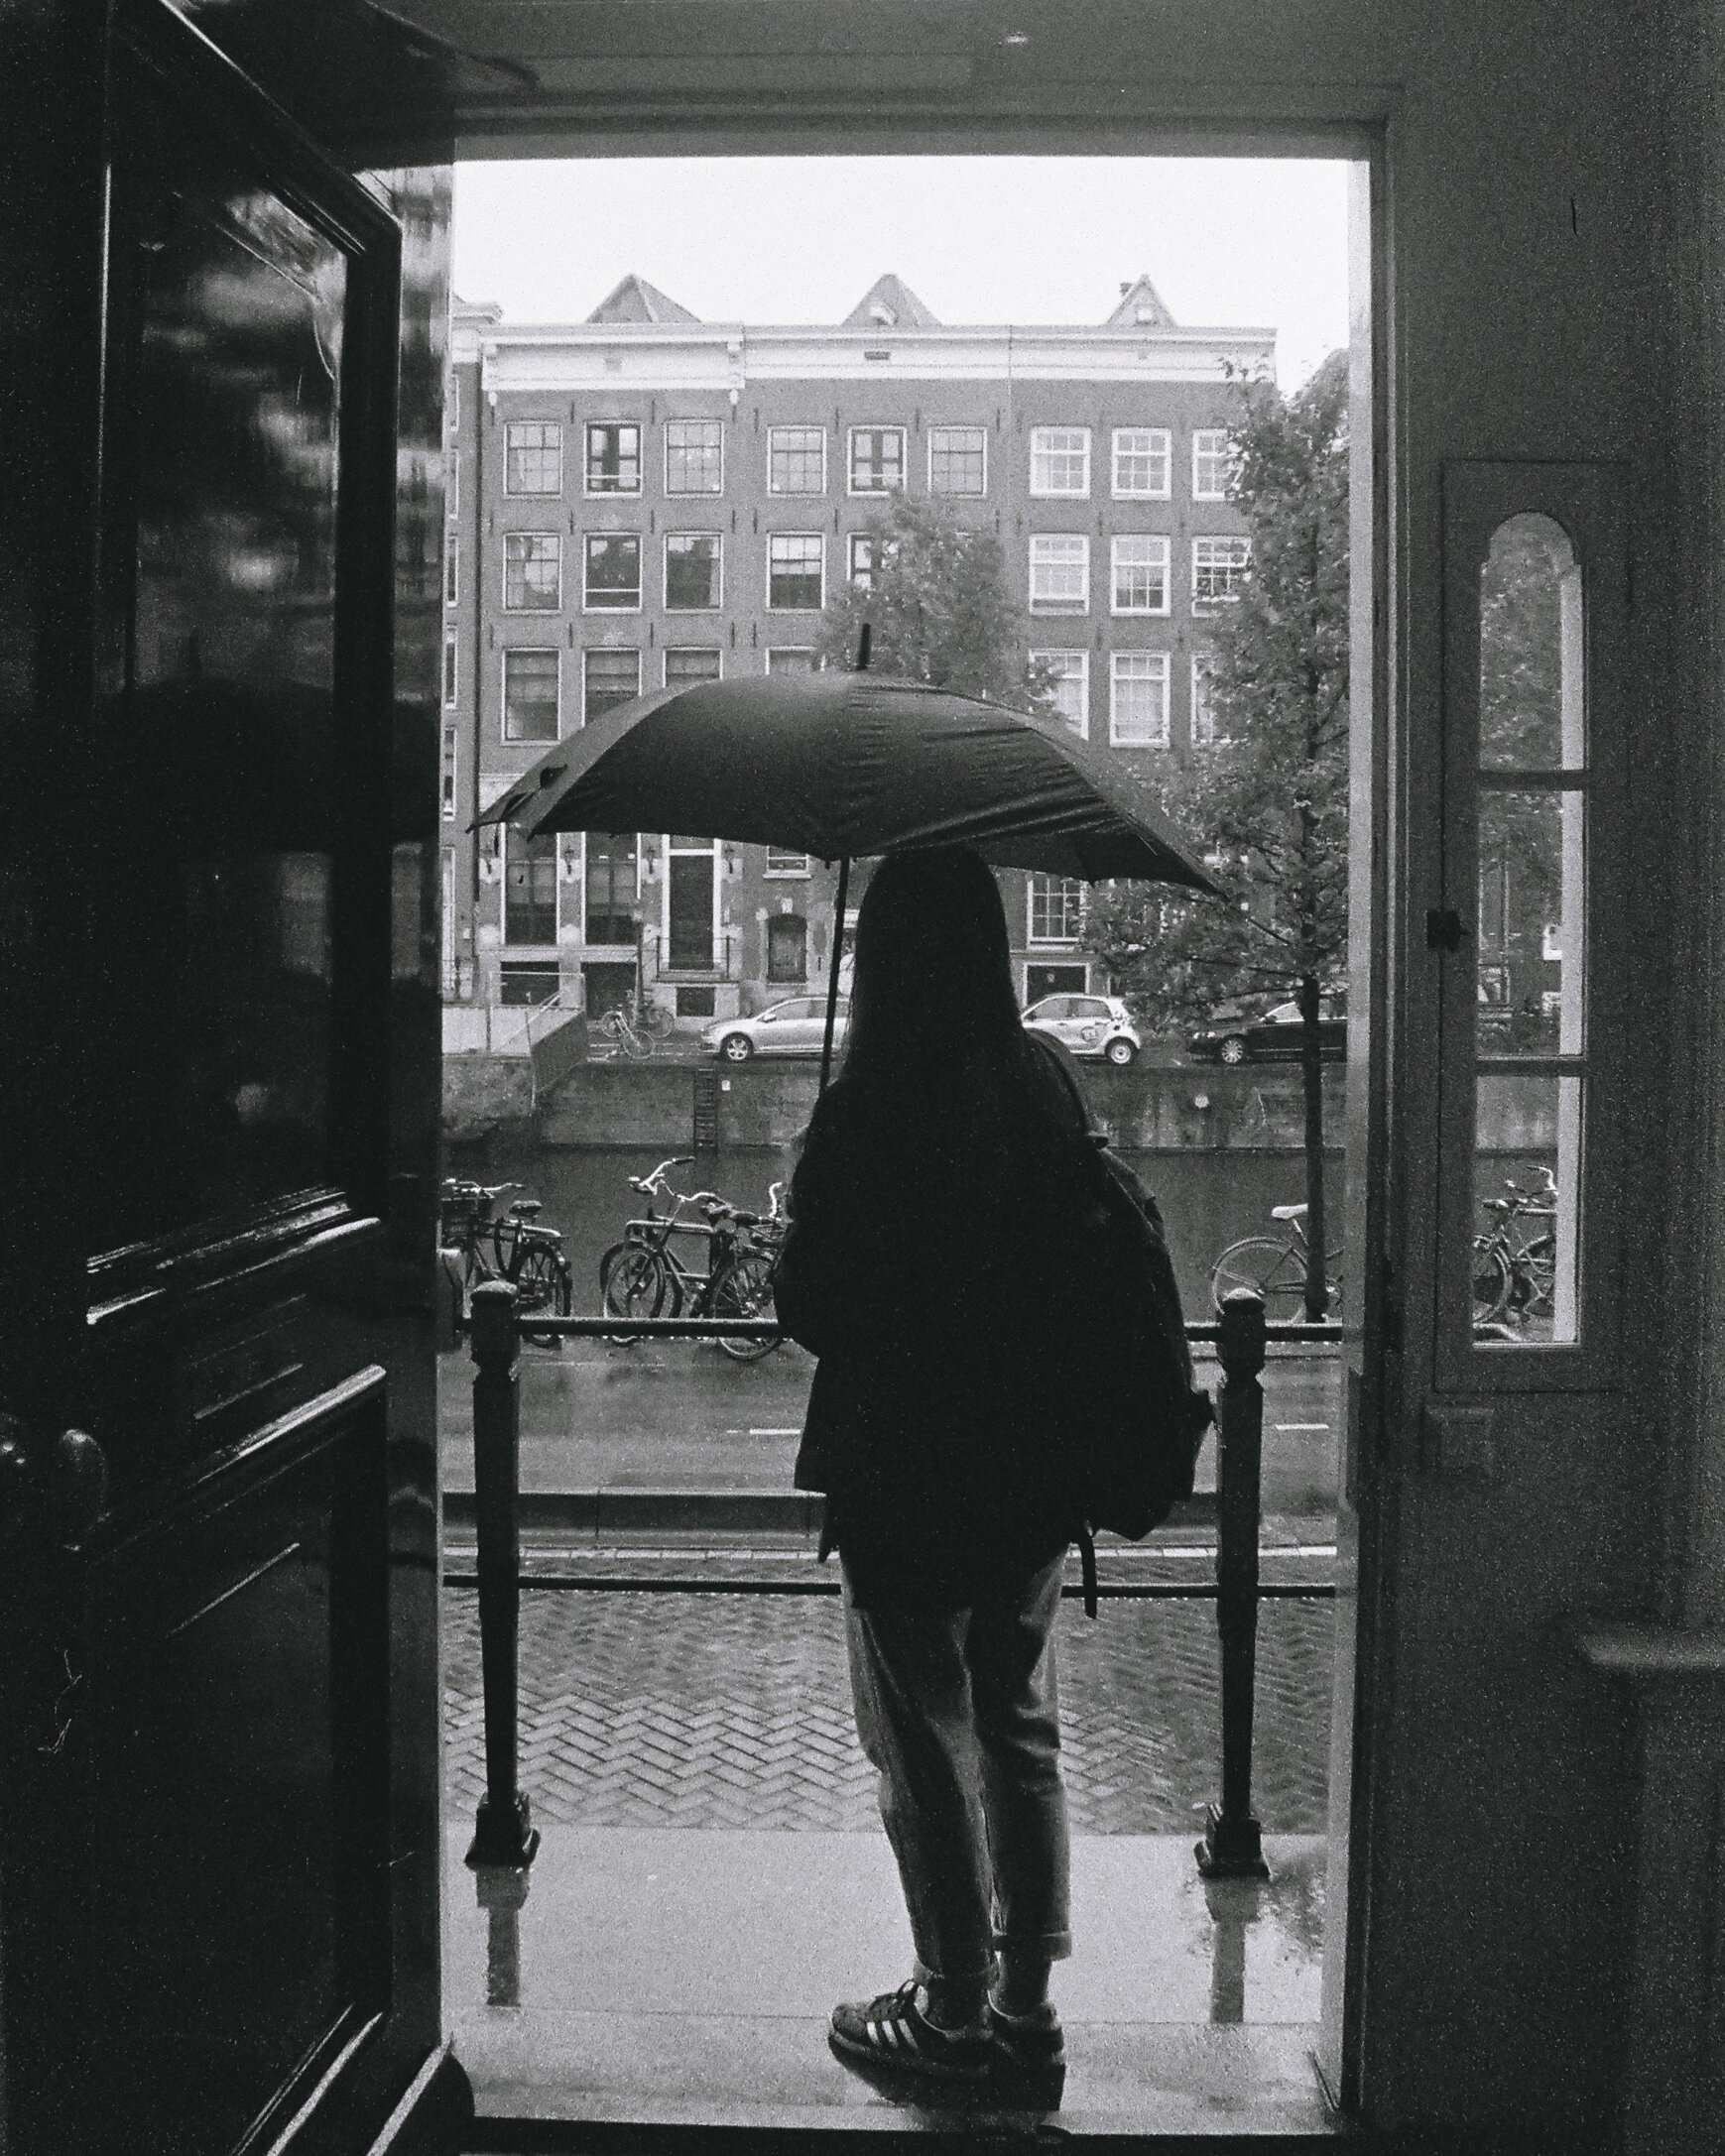 Rainy morning in Amsterdam, 2018.